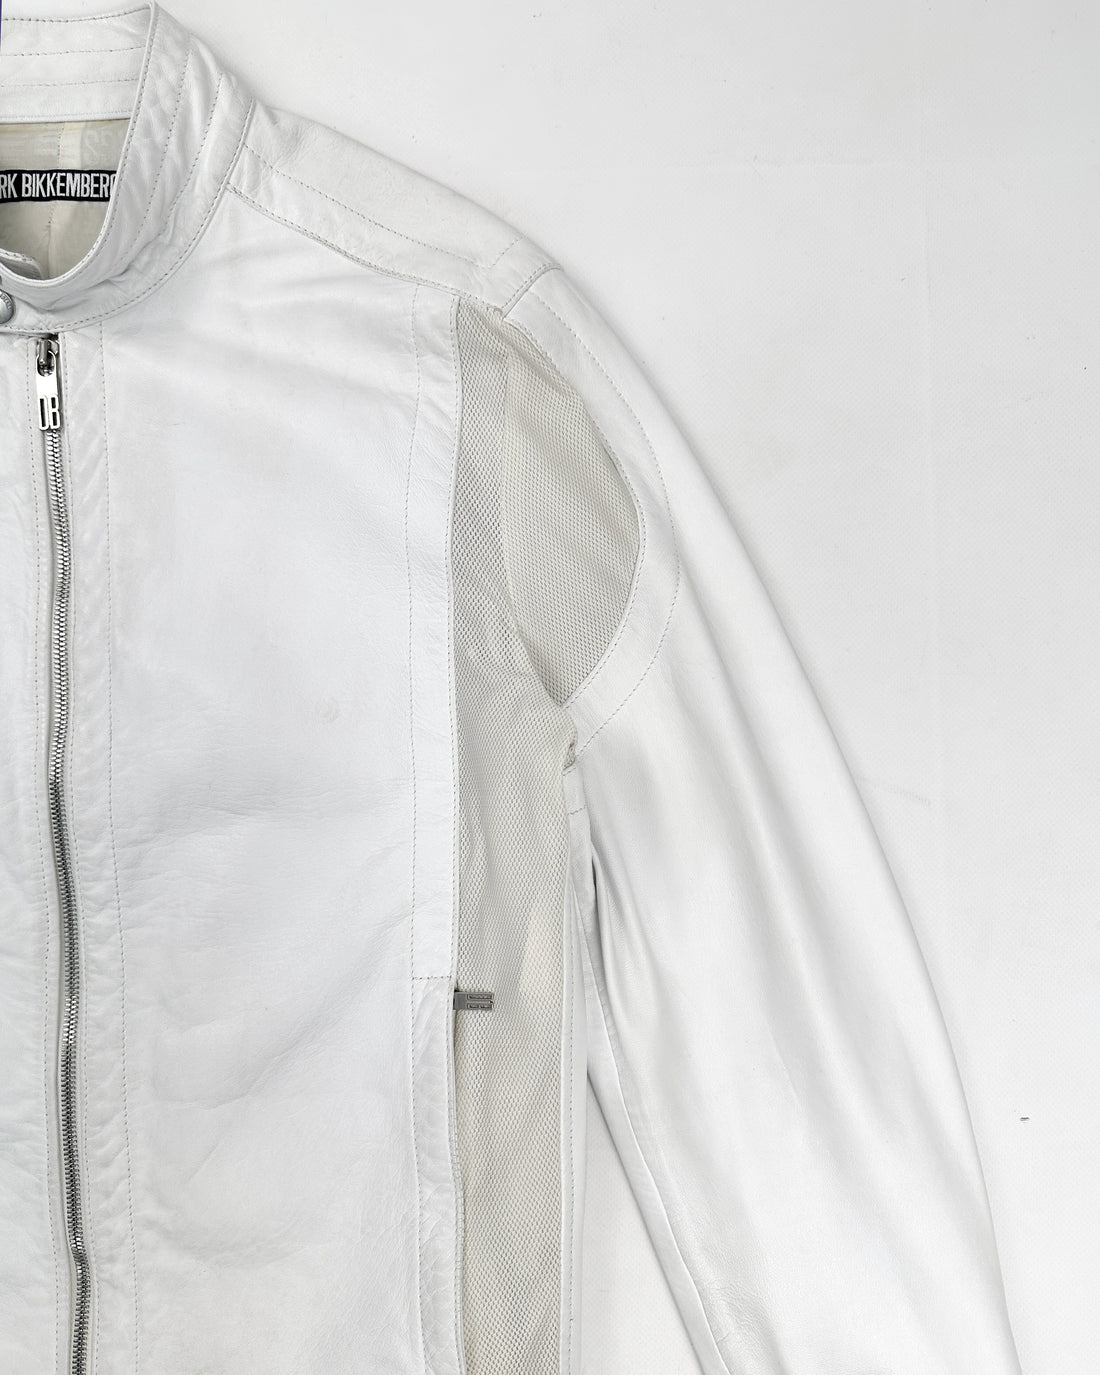 Dirk Bikkembergs Leather + Mesh White Jacket 1990's